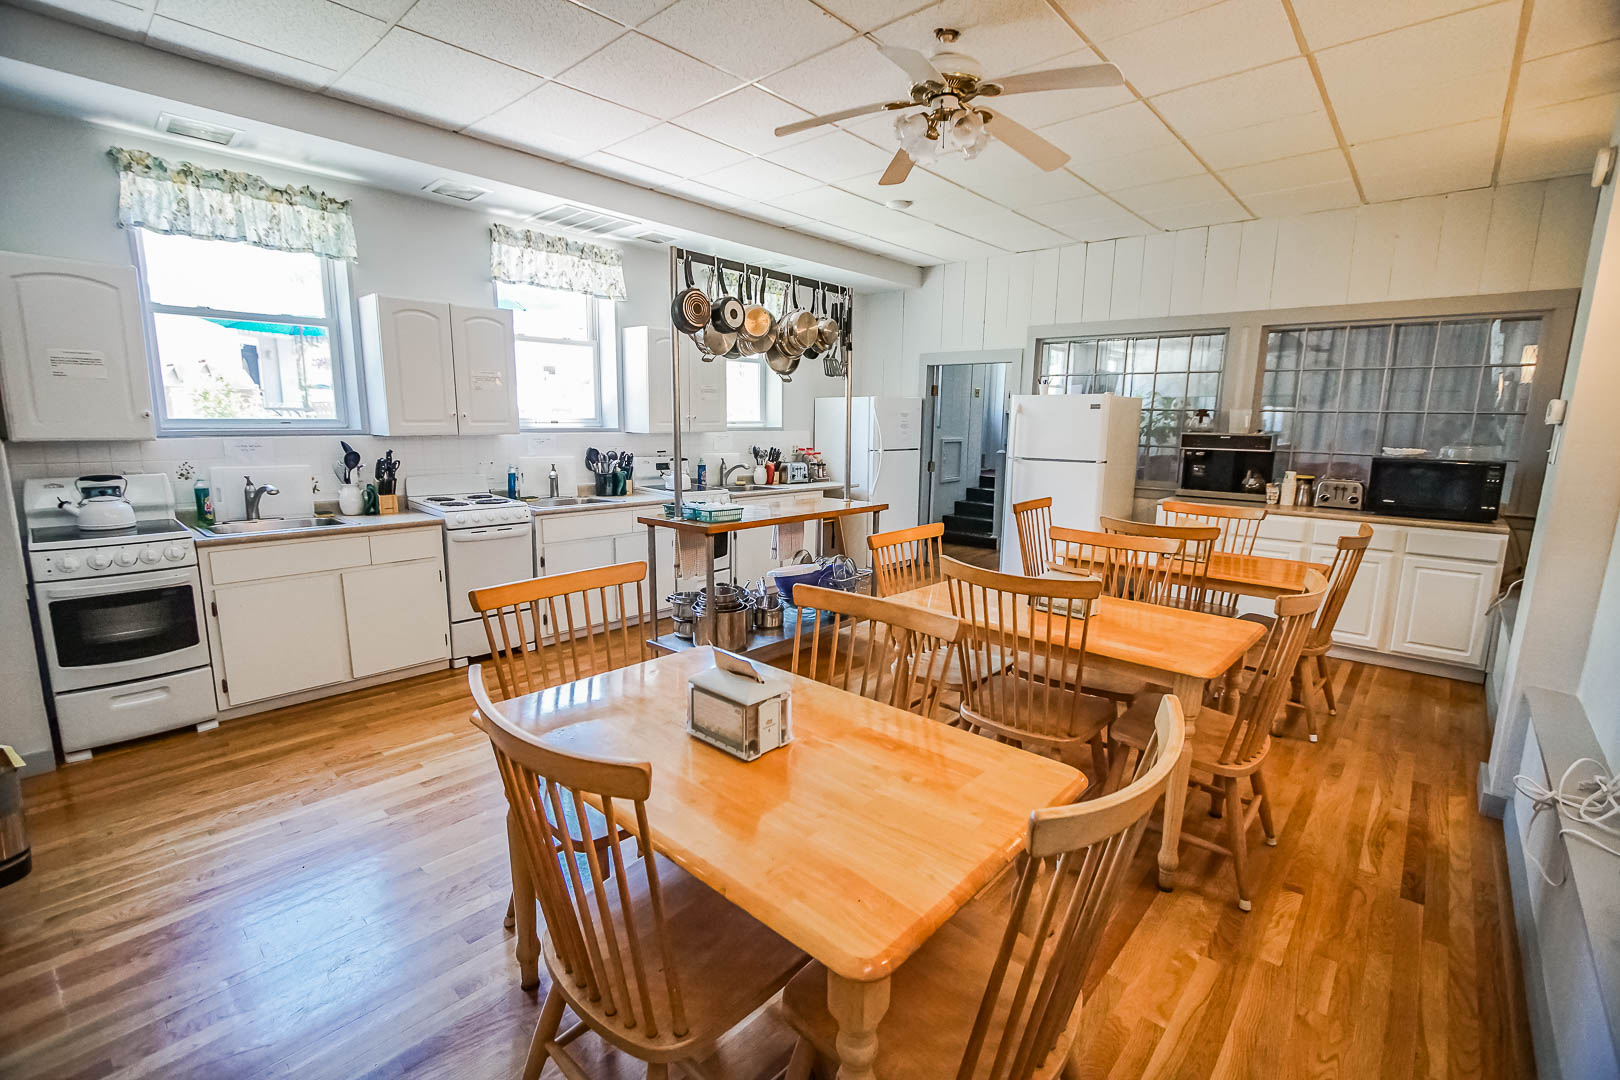 A welcoming communal kitchen at VRI's Harbor Landing Resort in Massachusetts.